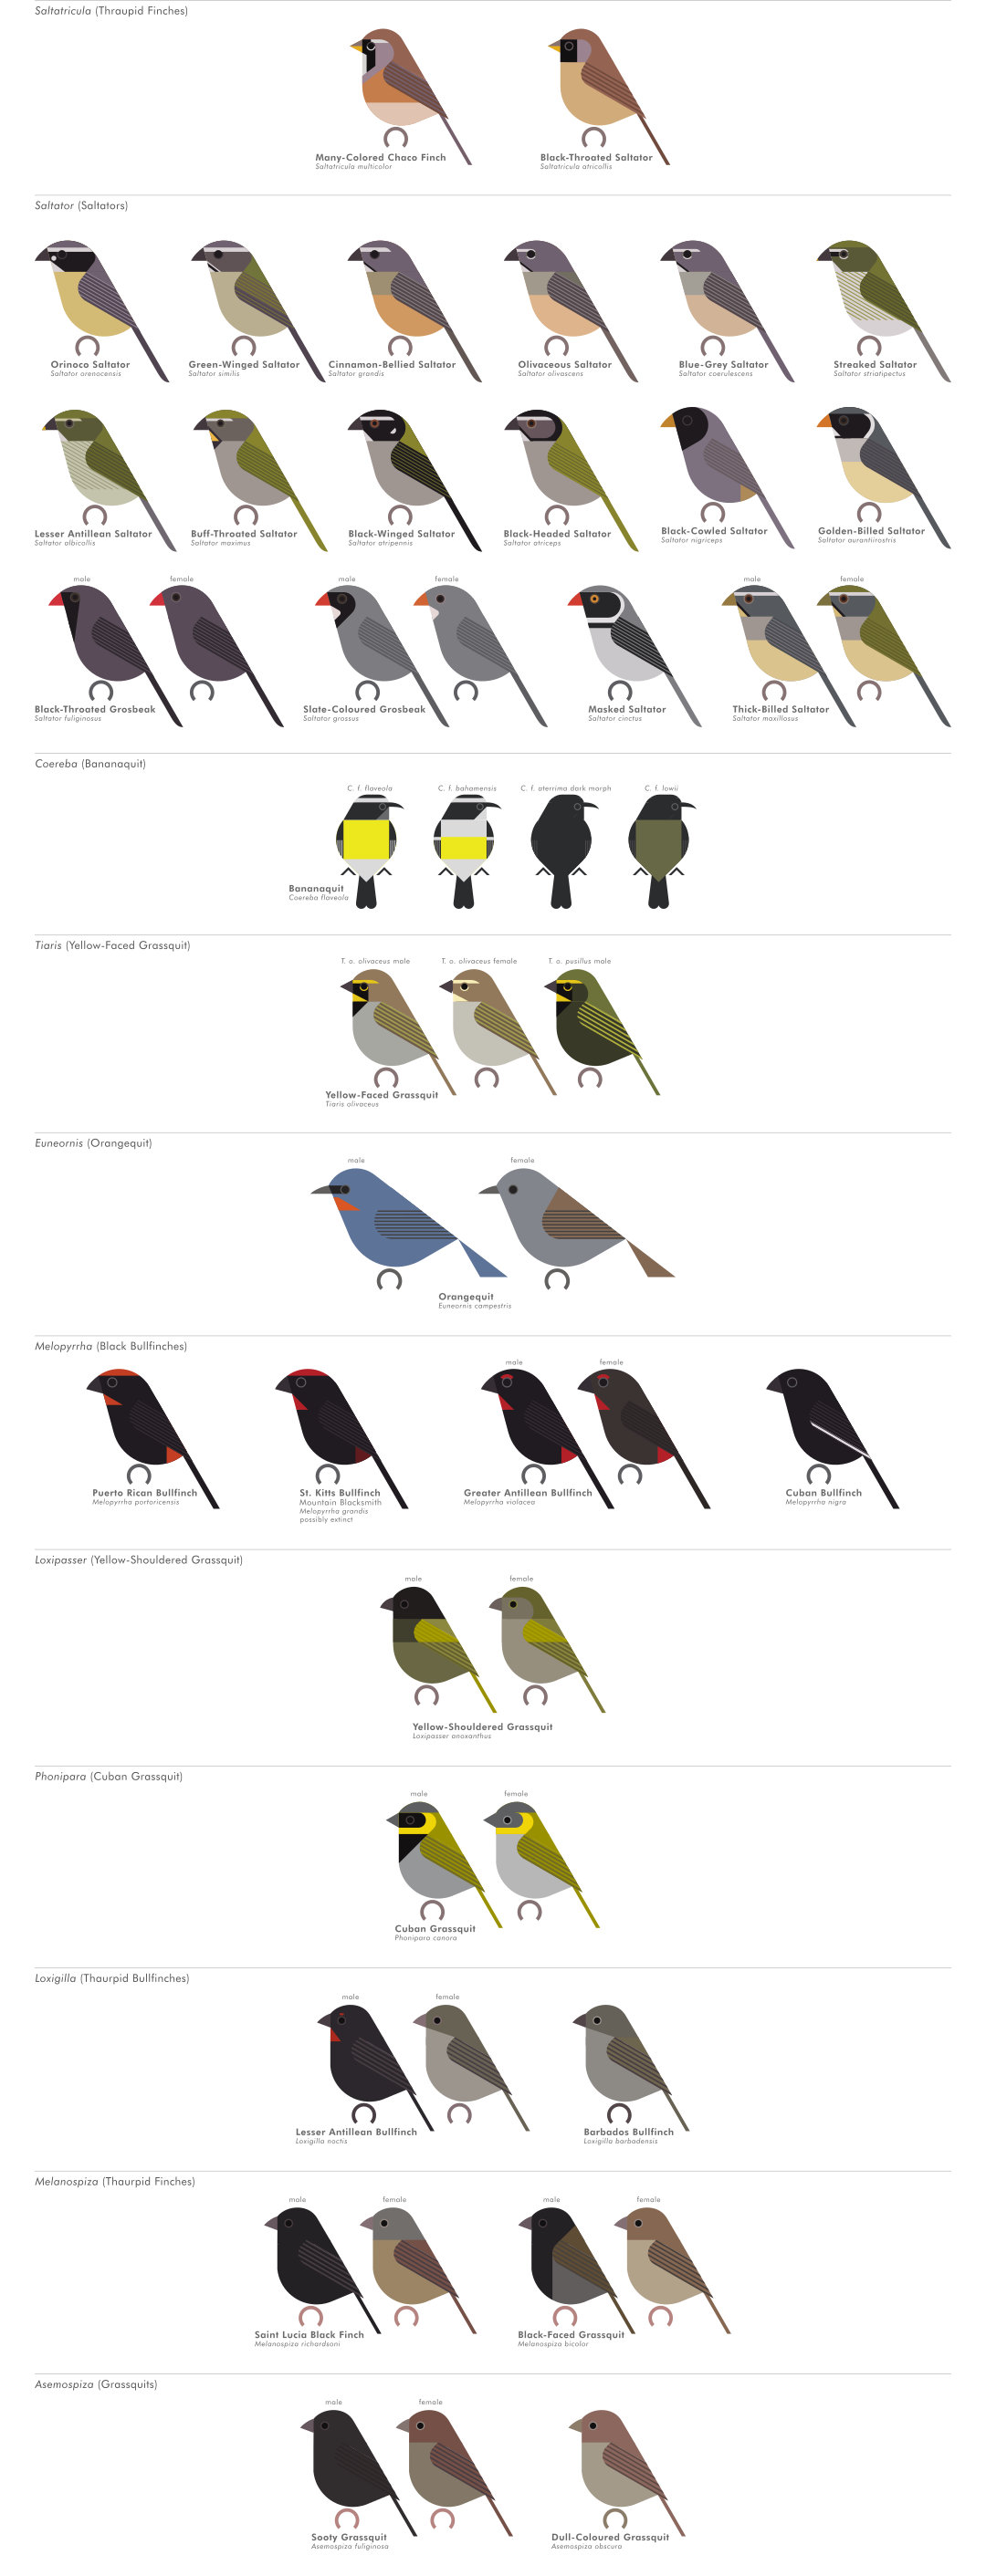 scott partridge - AVE - avian vector encyclopedia - tanagers - bird vector art